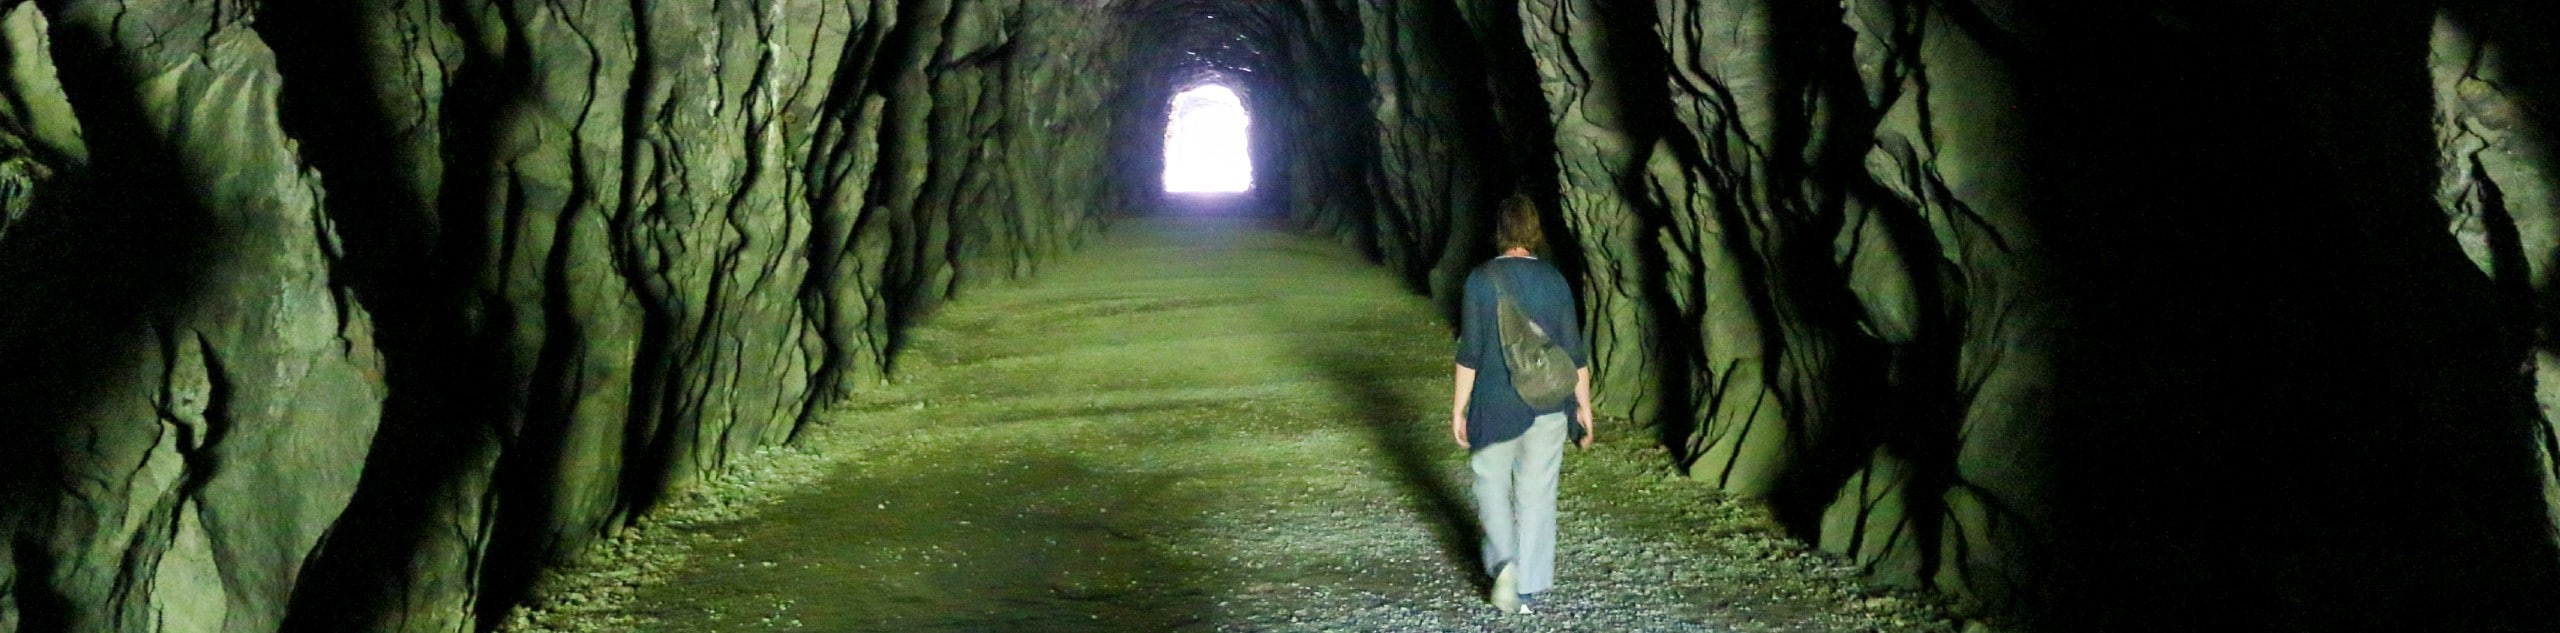 Othello Tunnels via Kettle Valley Trail